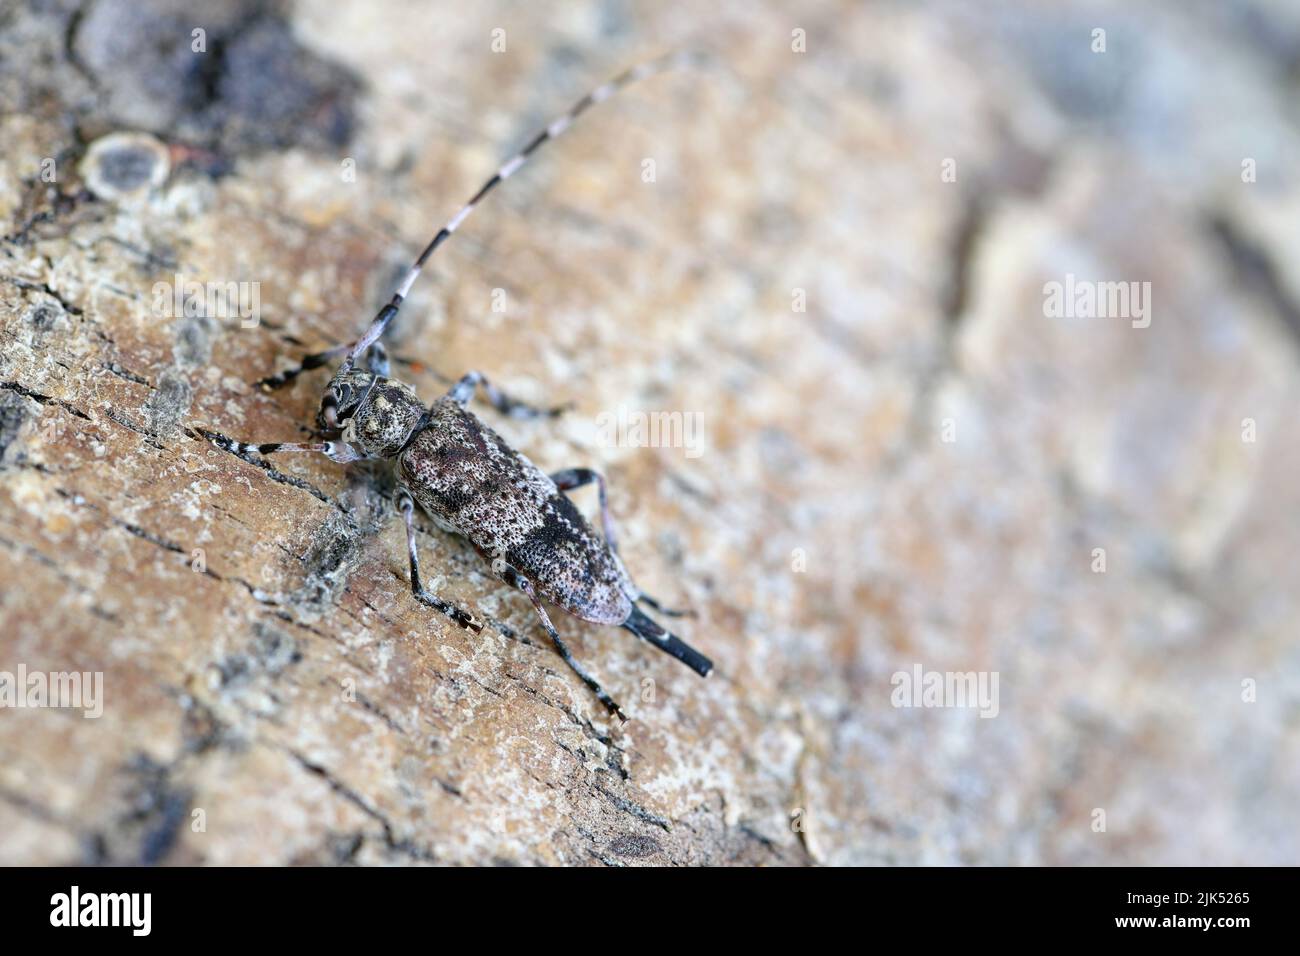 Longhorn-Käfer, Acanthocinus griseus auf Rinde. Stockfoto